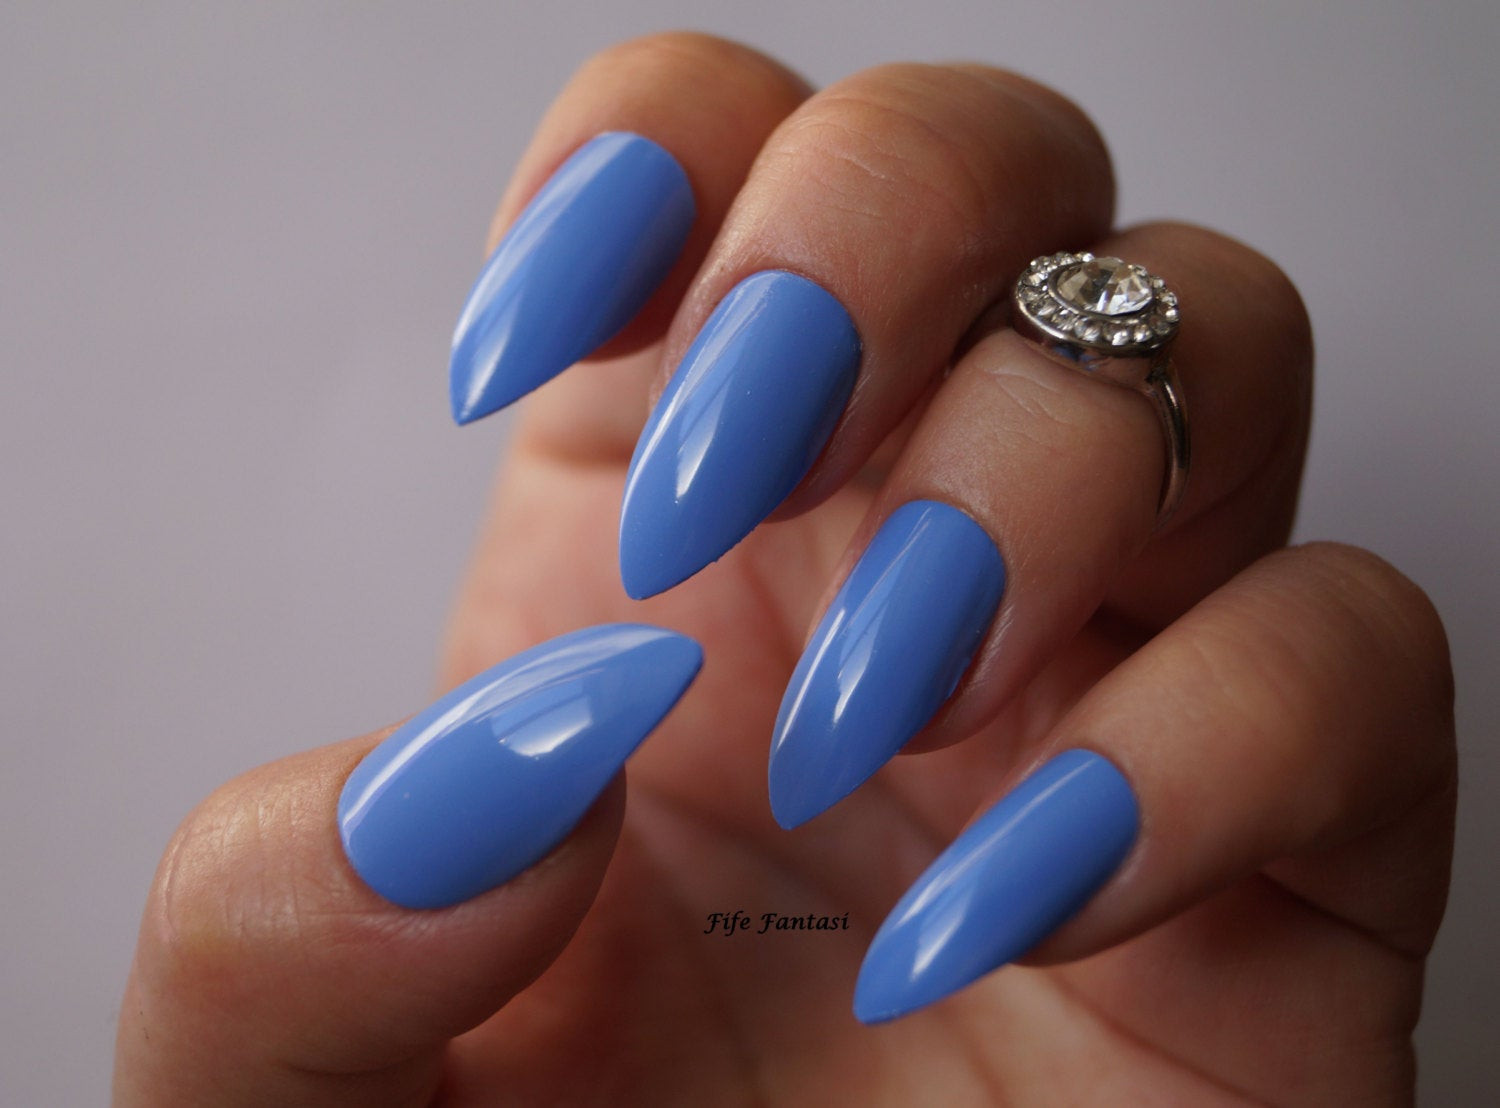 Stiletto Acrylic Nail Designs
 Blue stiletto nails Nail art Nails Stiletto nails Acrylic